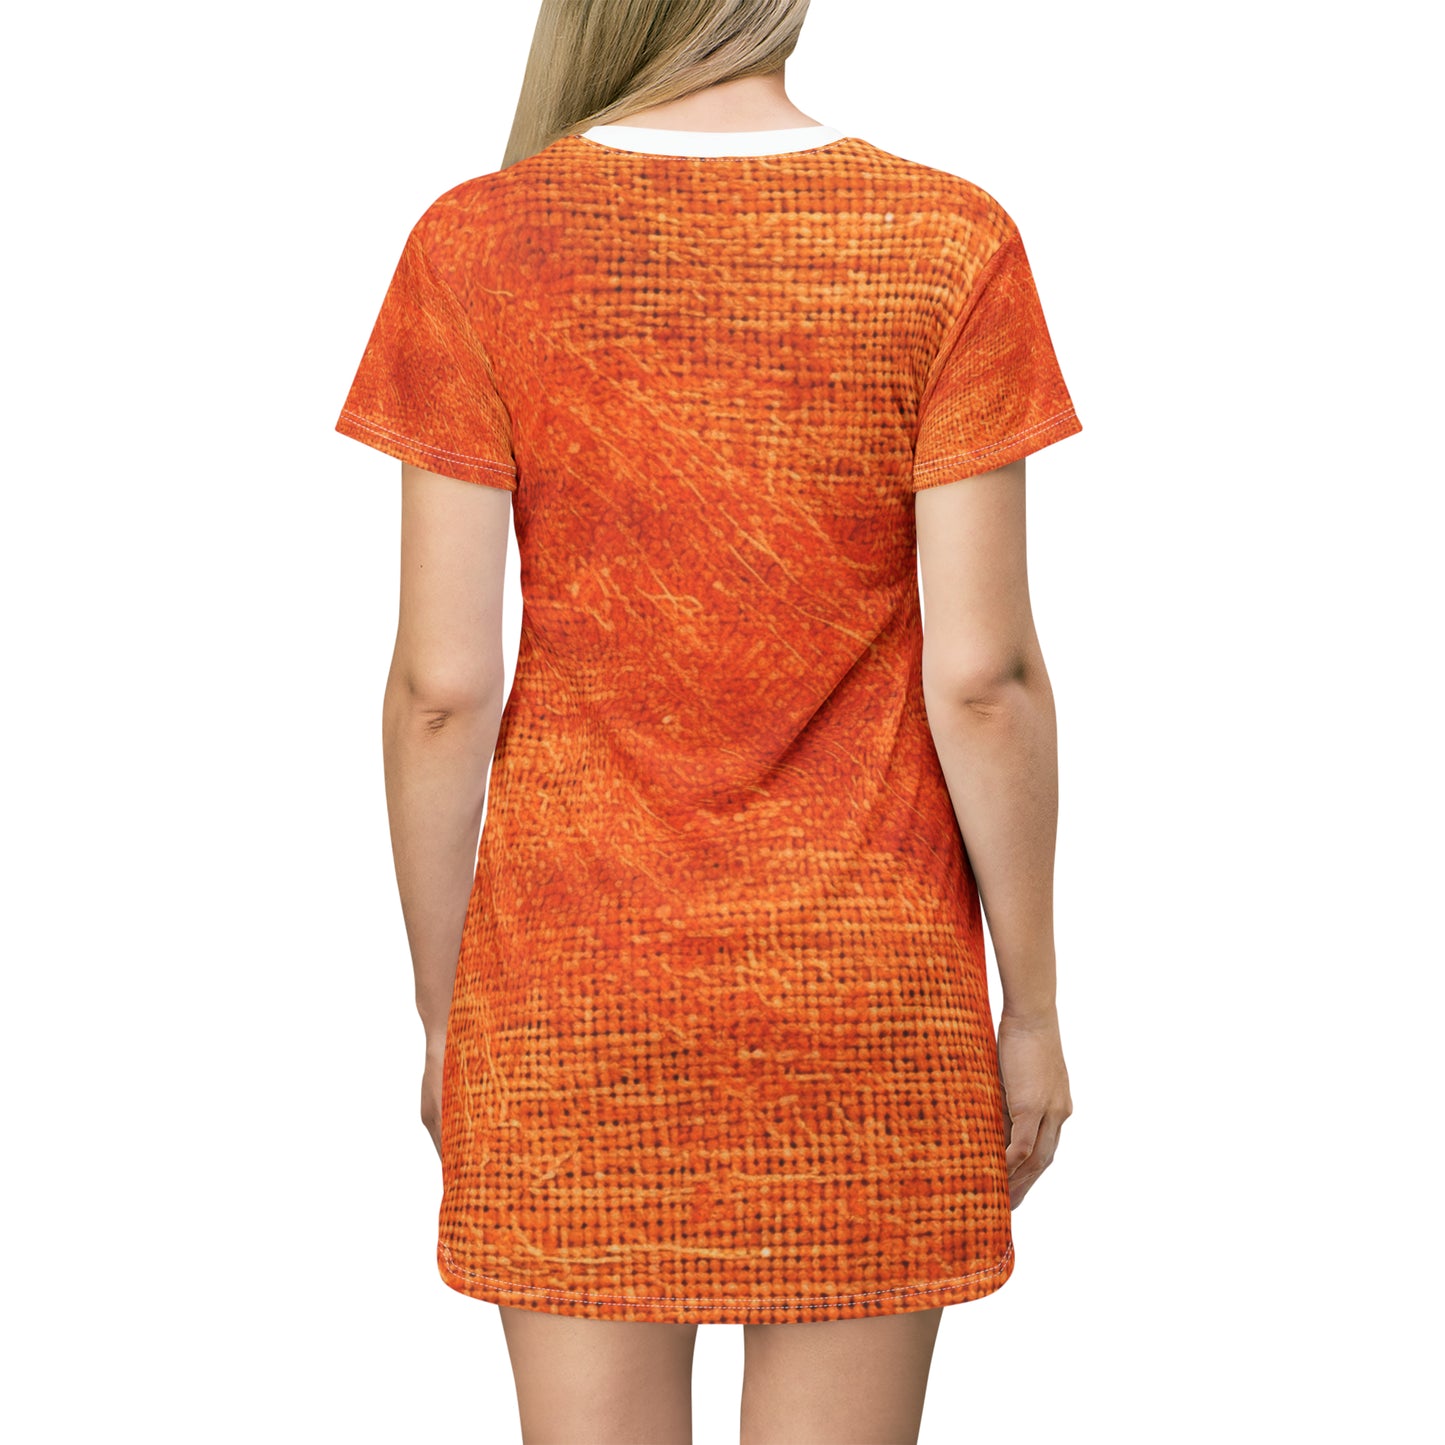 Burnt Orange/Rust: Denim-Inspired Autumn Fall Color Fabric - T-Shirt Dress (AOP)